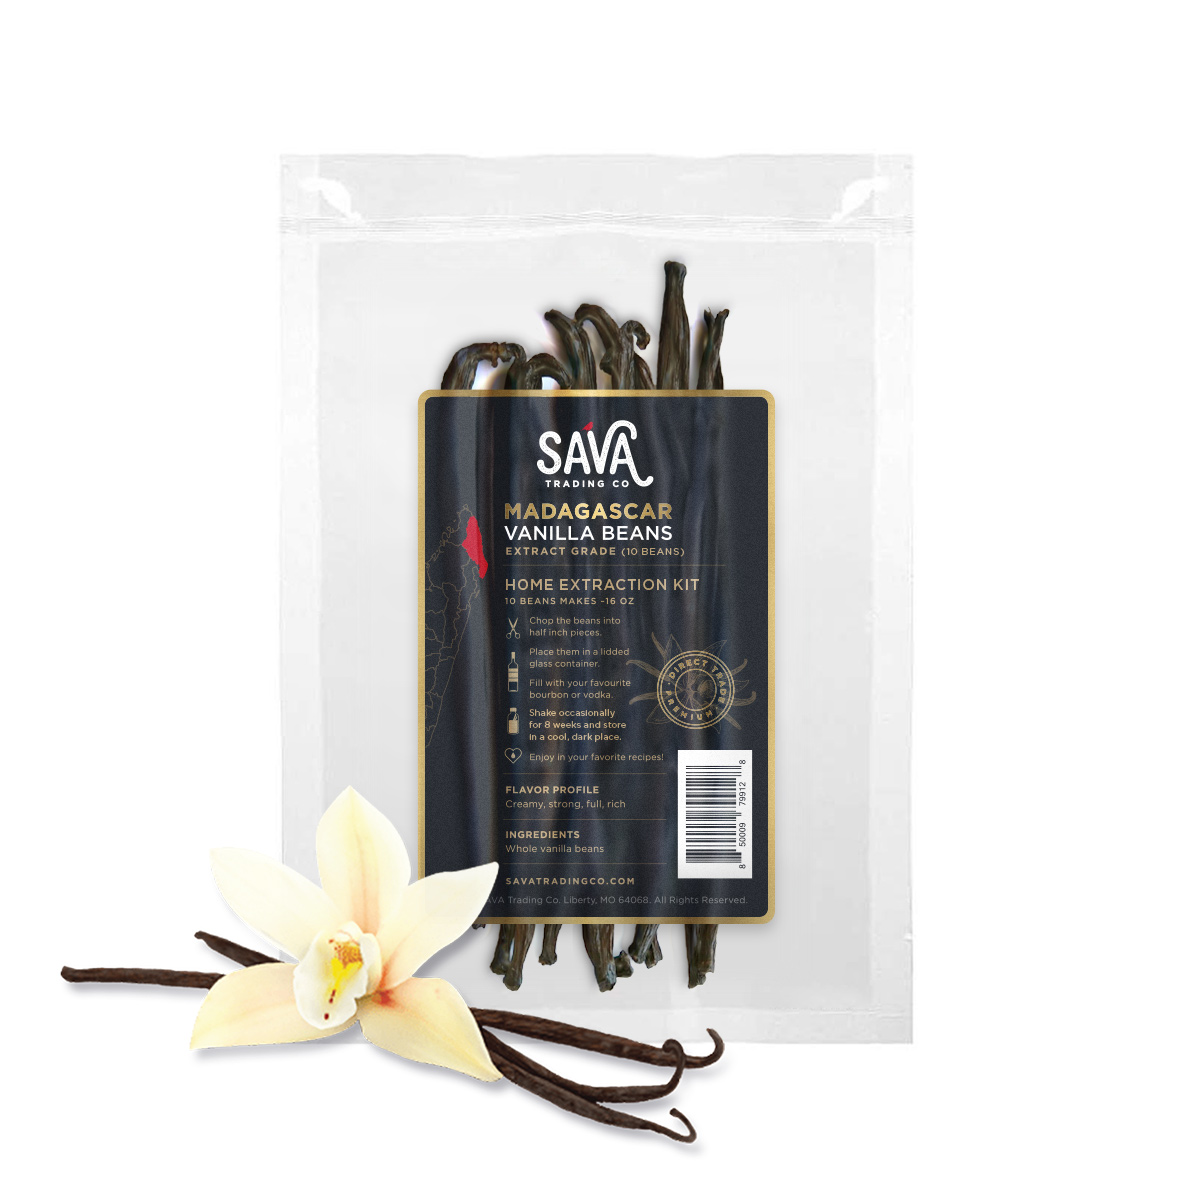 SAVA-Trading-Co-Madagascar-Vanilla-Beans-Home-Extraction-Kit-1-2